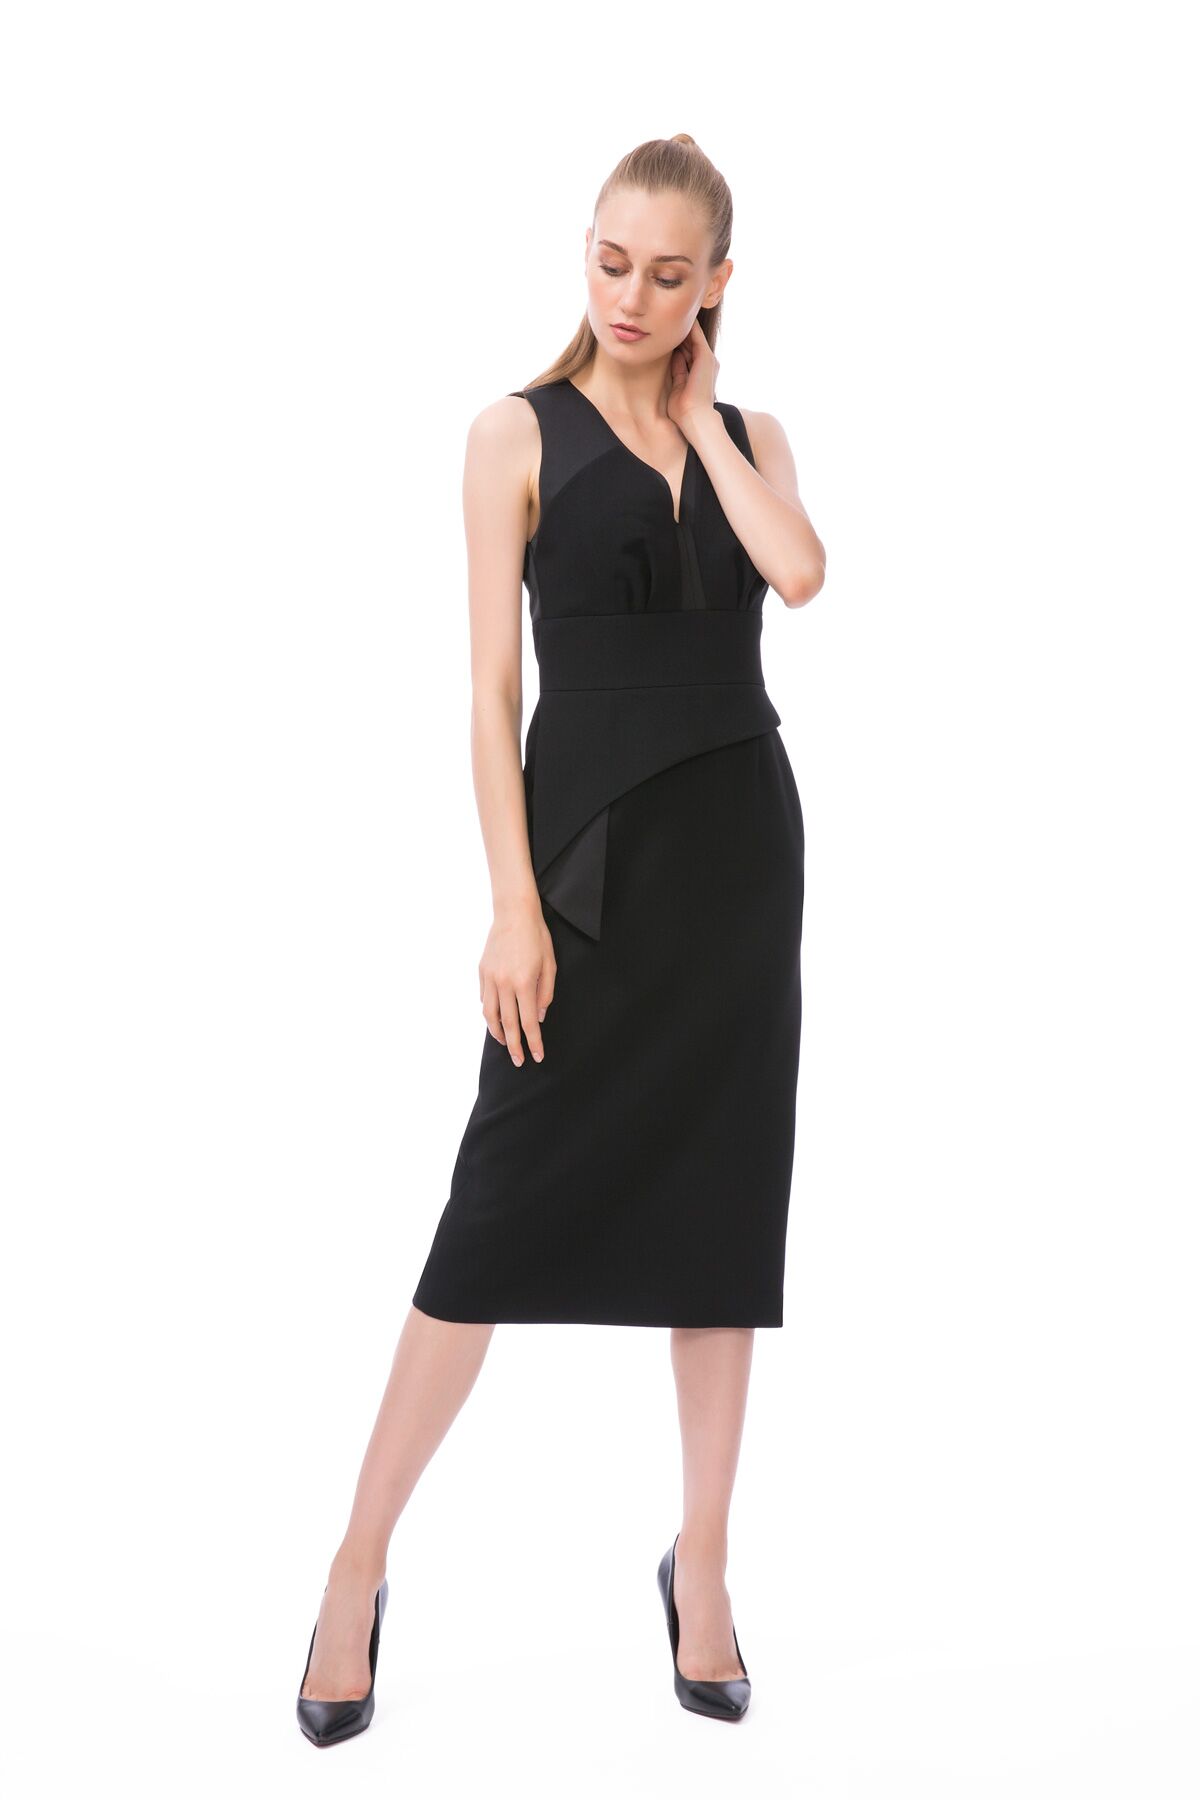  GIZIA - V Neck Sleeveless Midi Length Black Dress